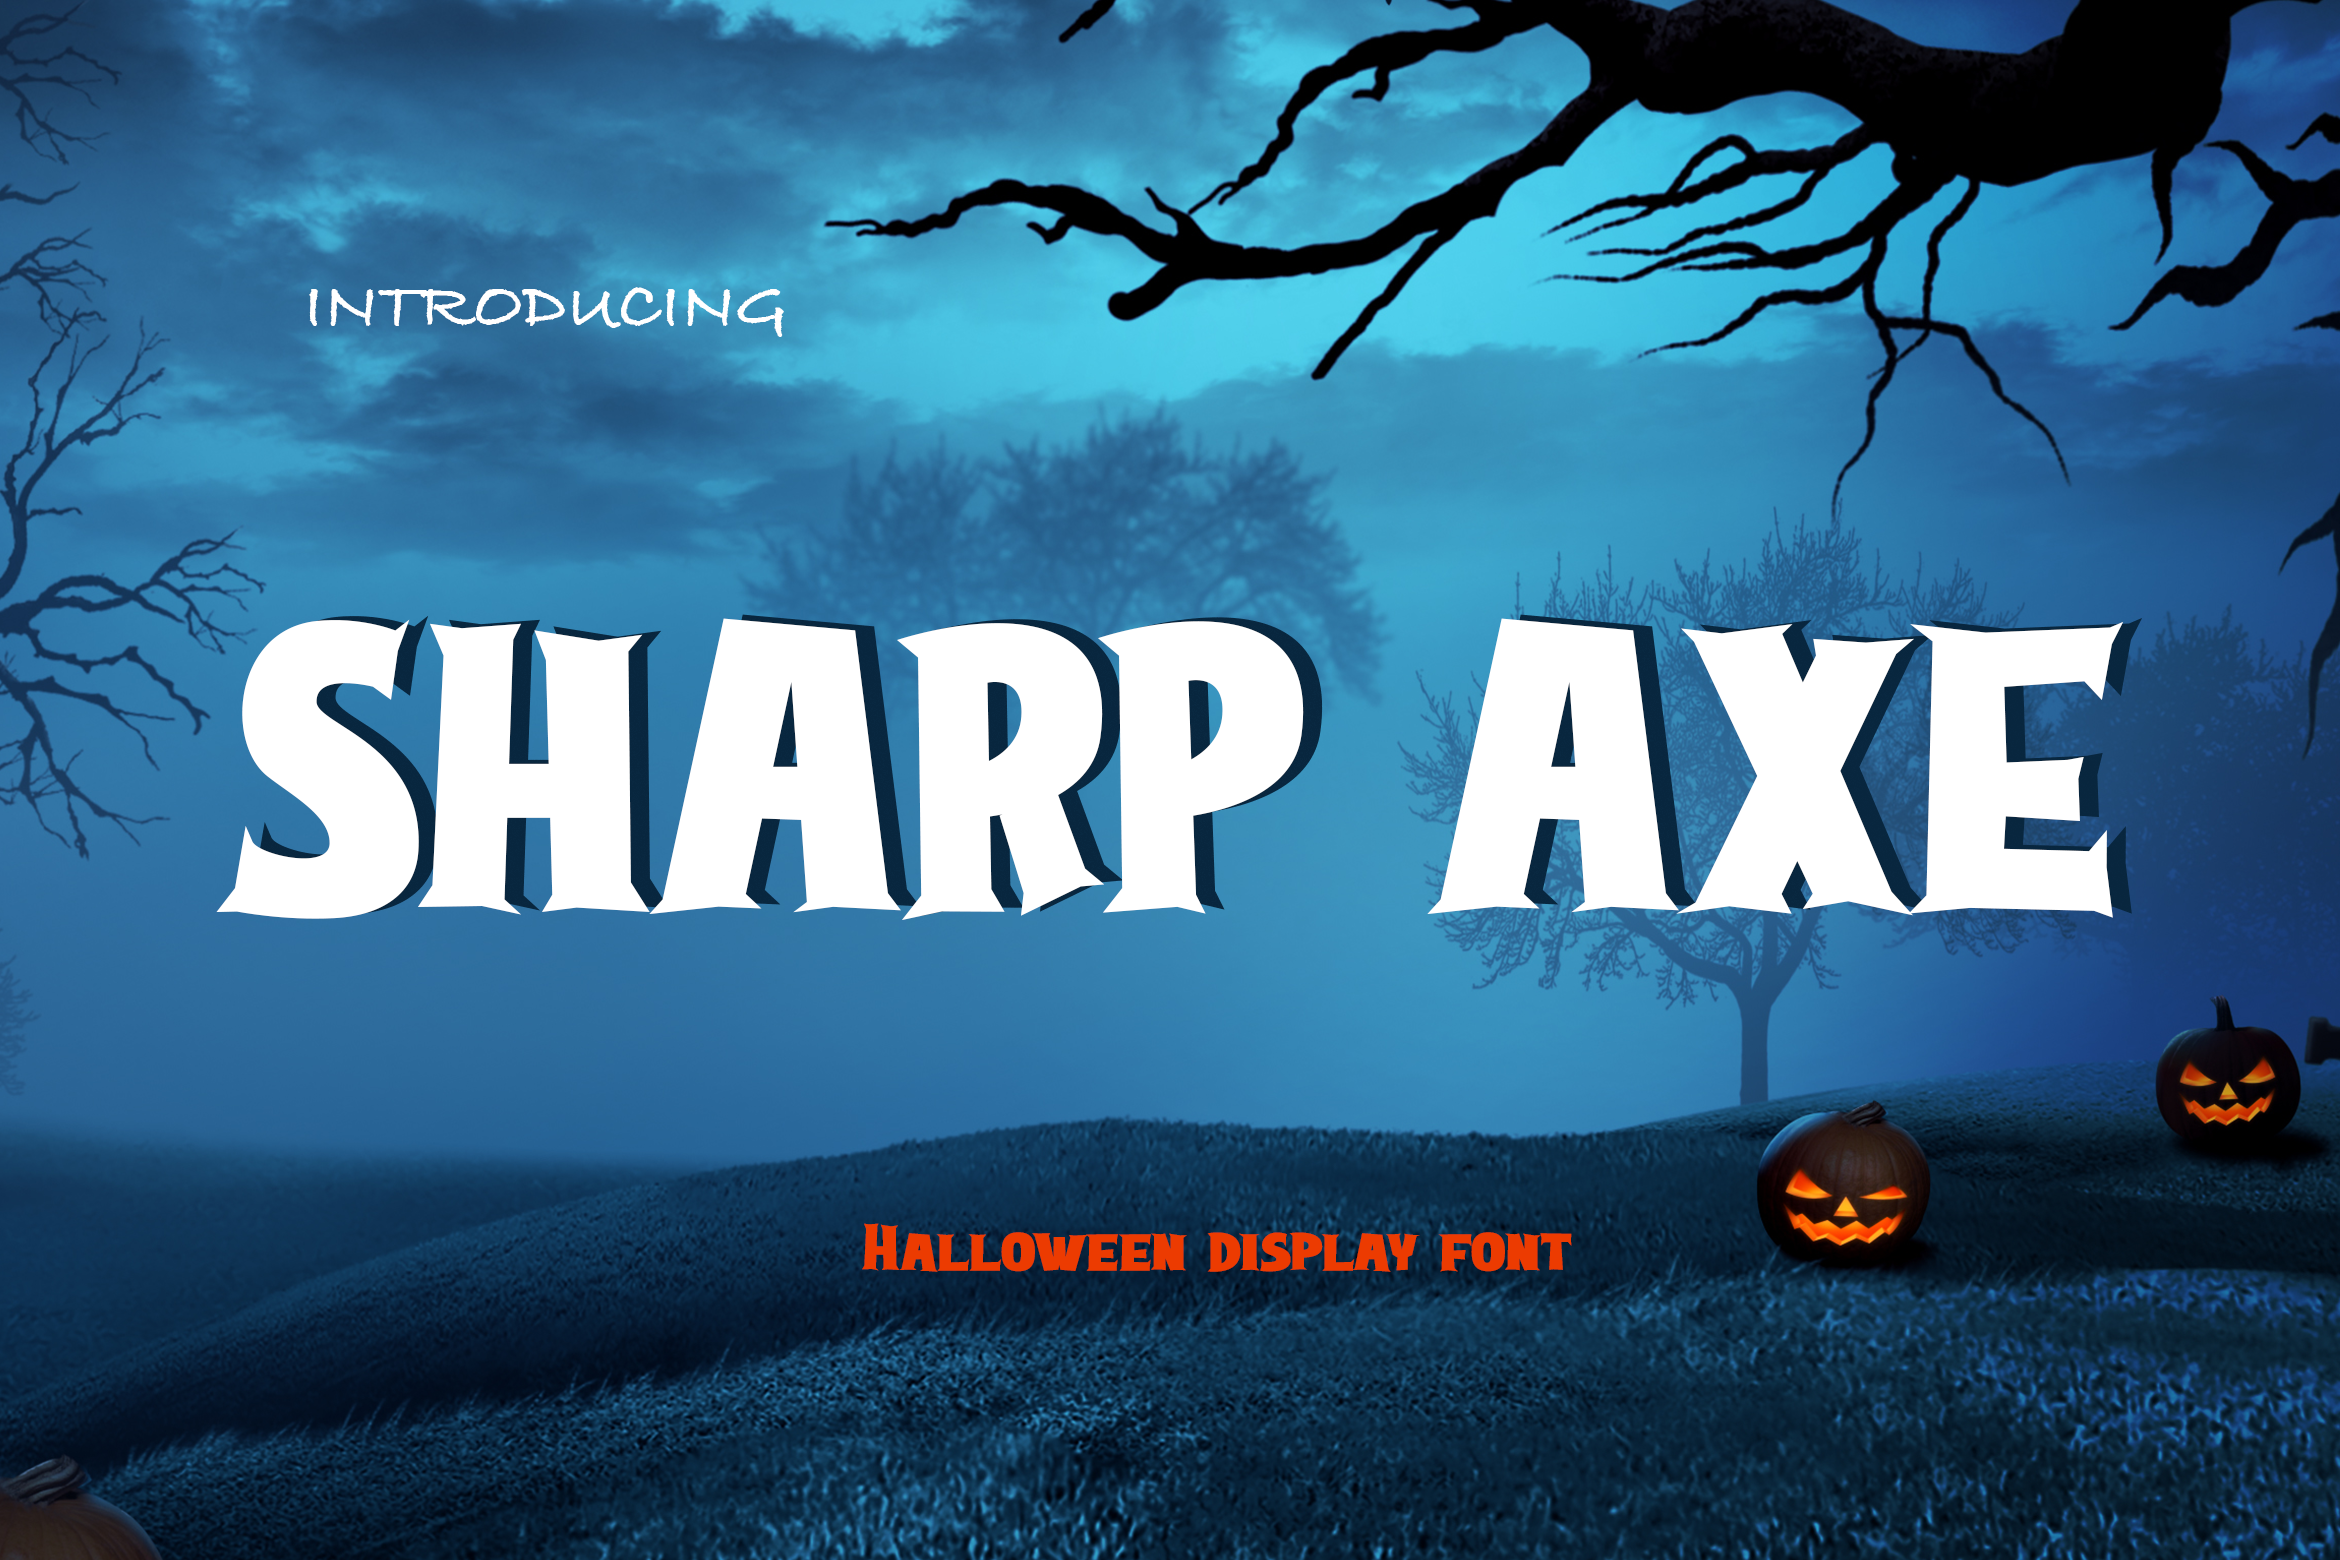 Sharp Axe